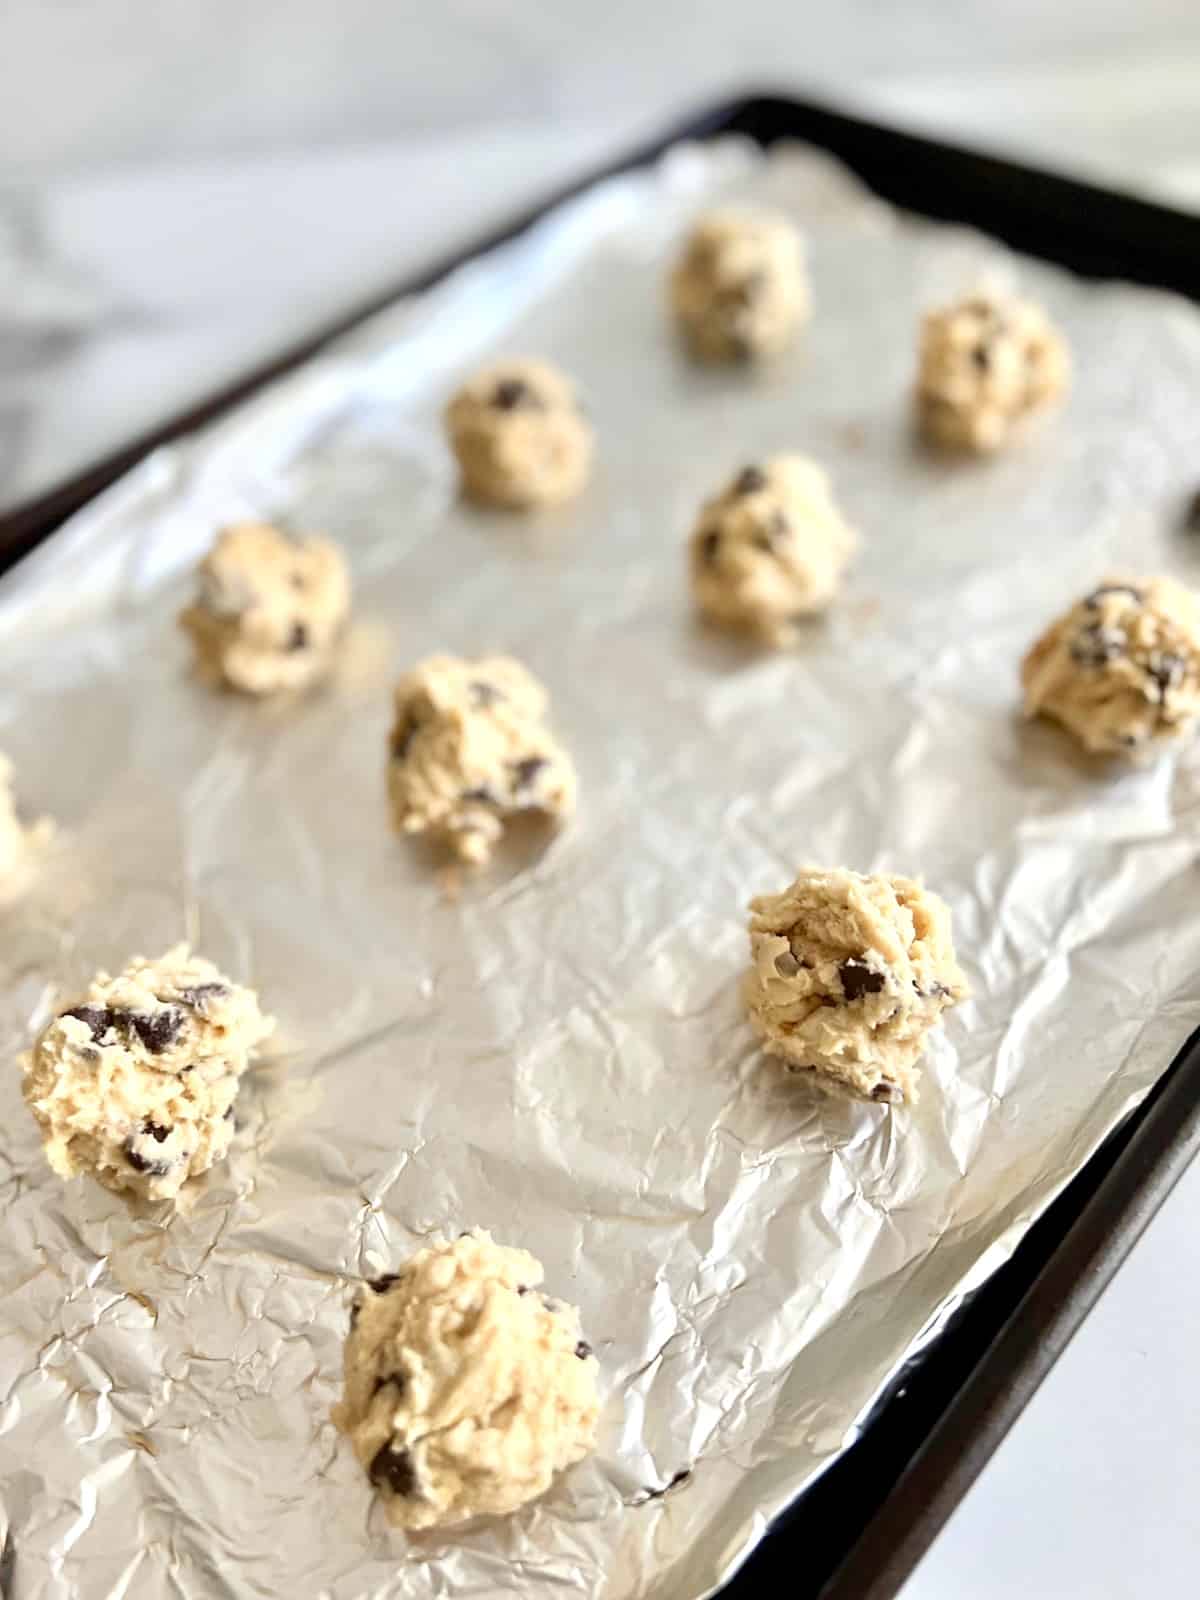 Sea Salt Toffee Chocolate Chip Cookies raw dough balls on a prepared baking sheet.